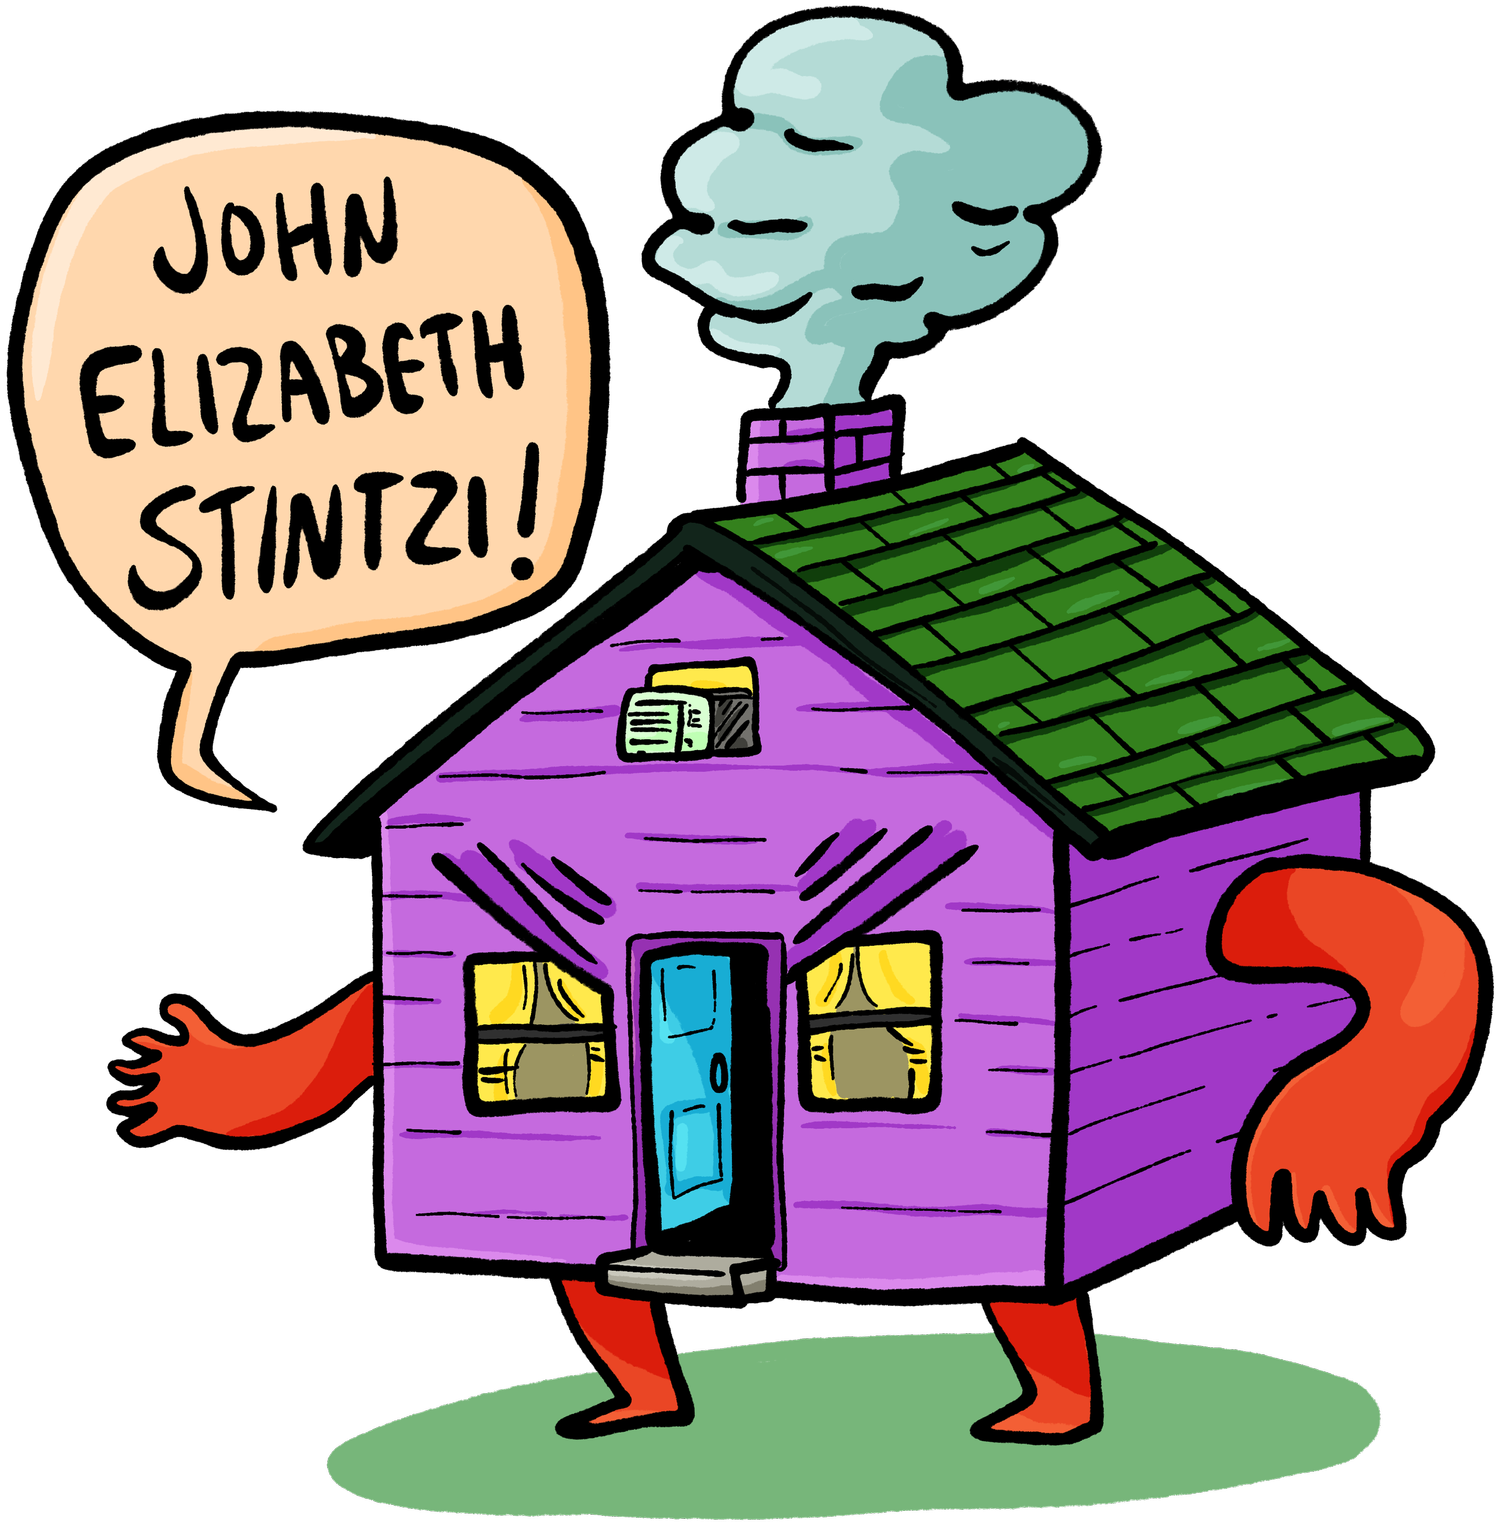 John Elizabeth Stintzi